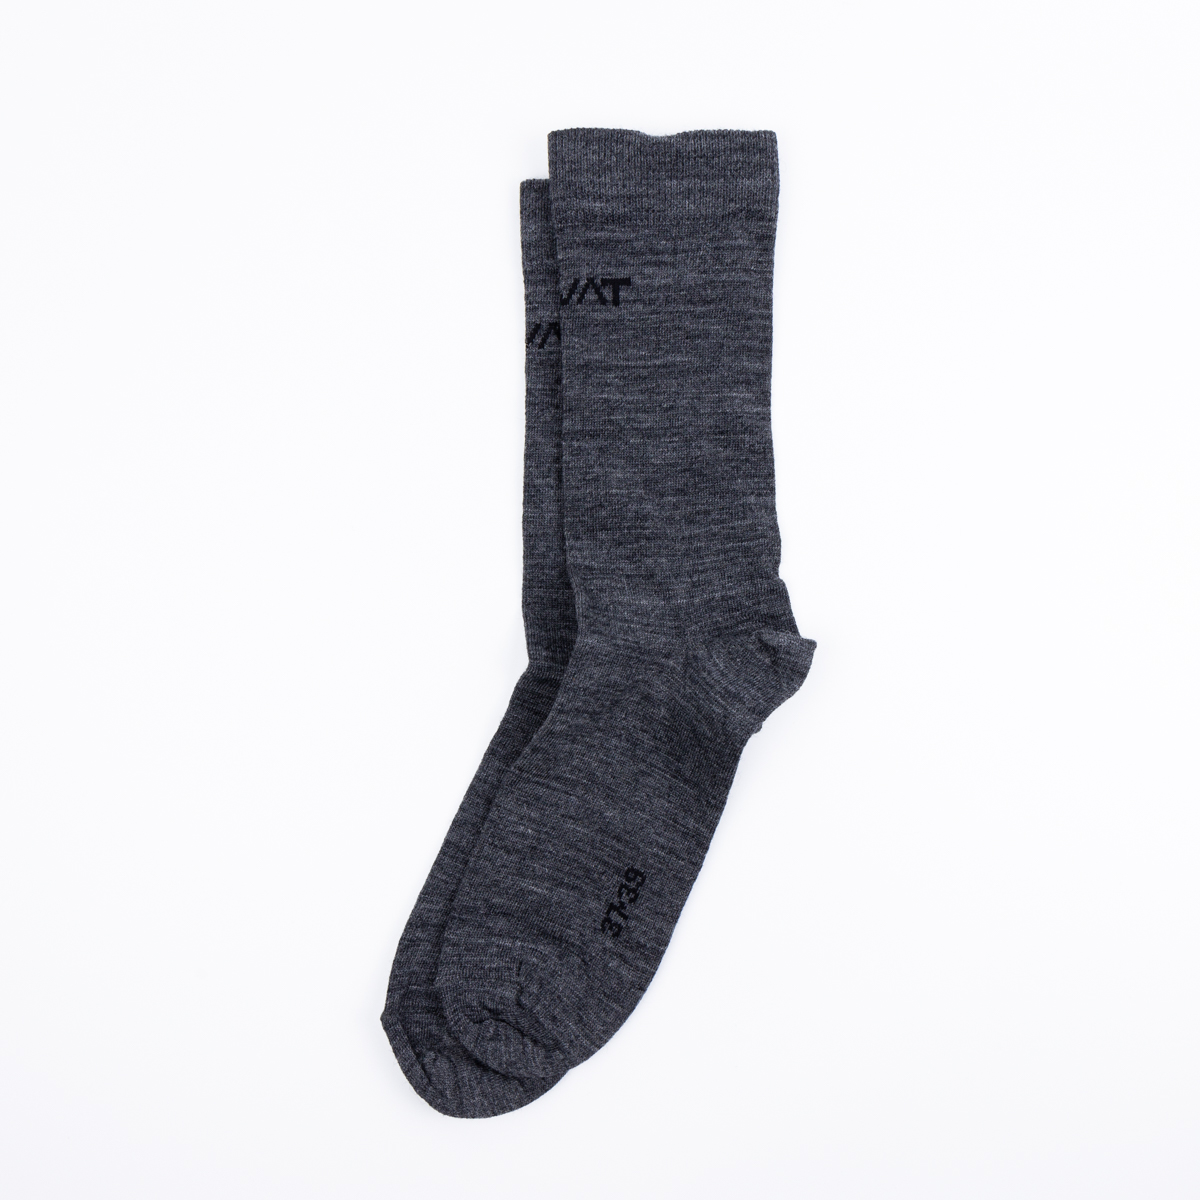 Fylsta Sock Dark greyproduct zoom image #1